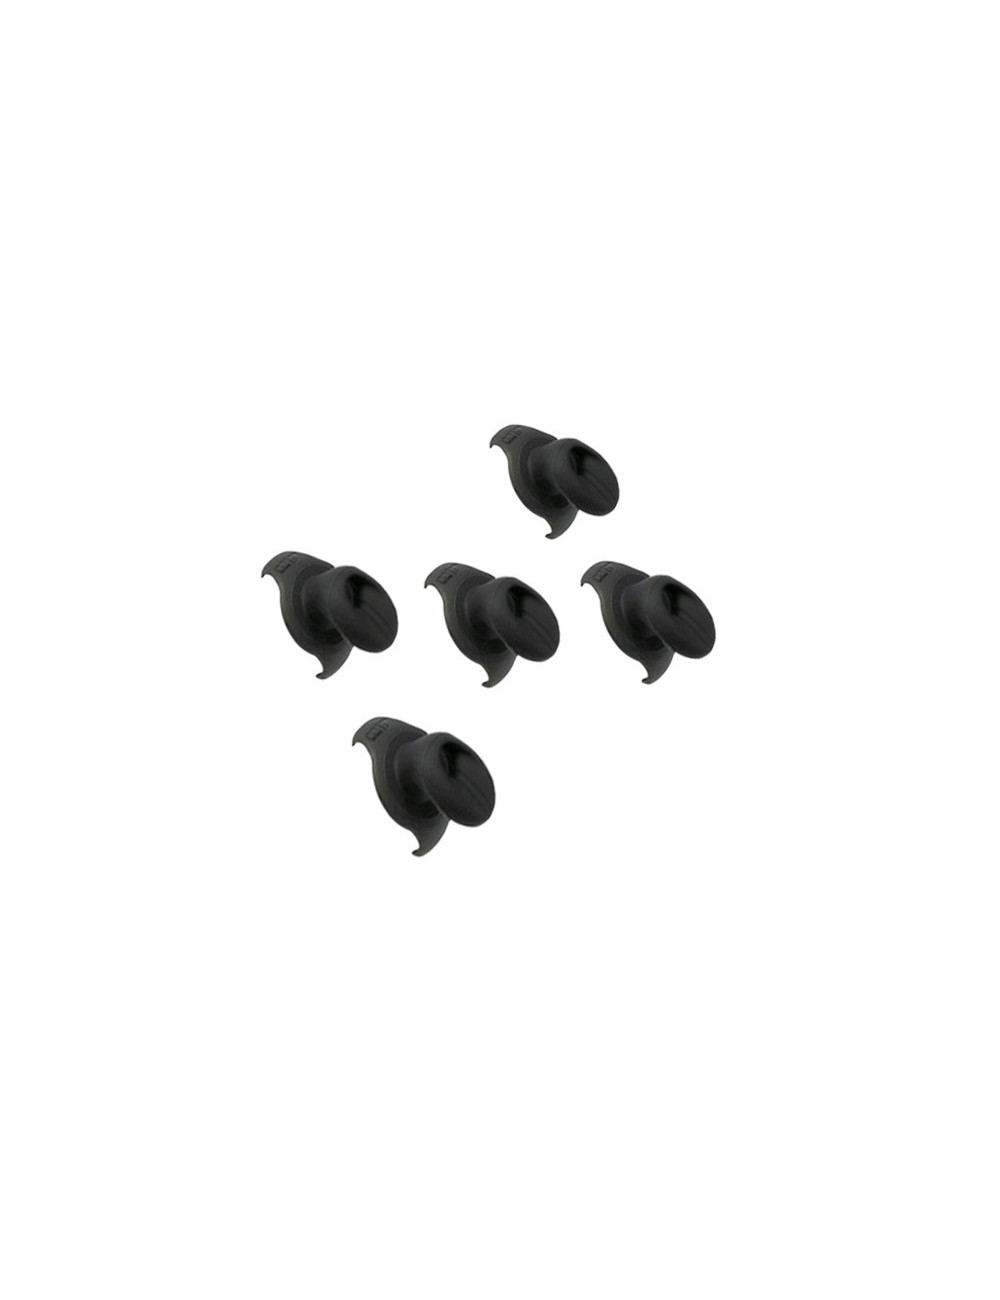 Náhradní špunty do uší - malé (5ks) PMLN7940A